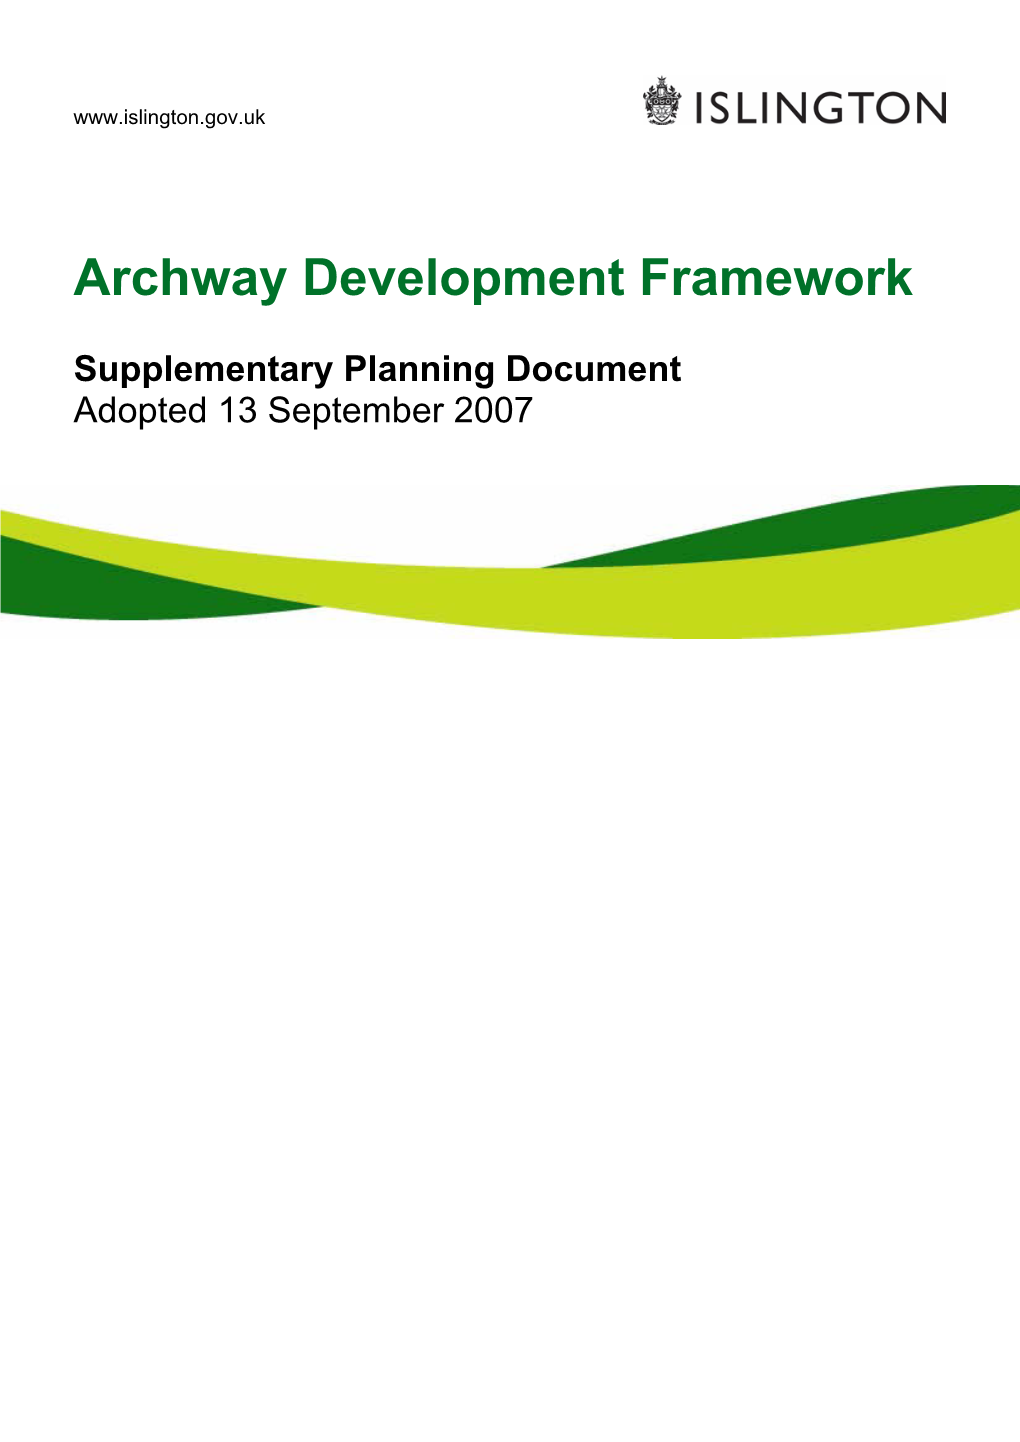 Archway Development Framework